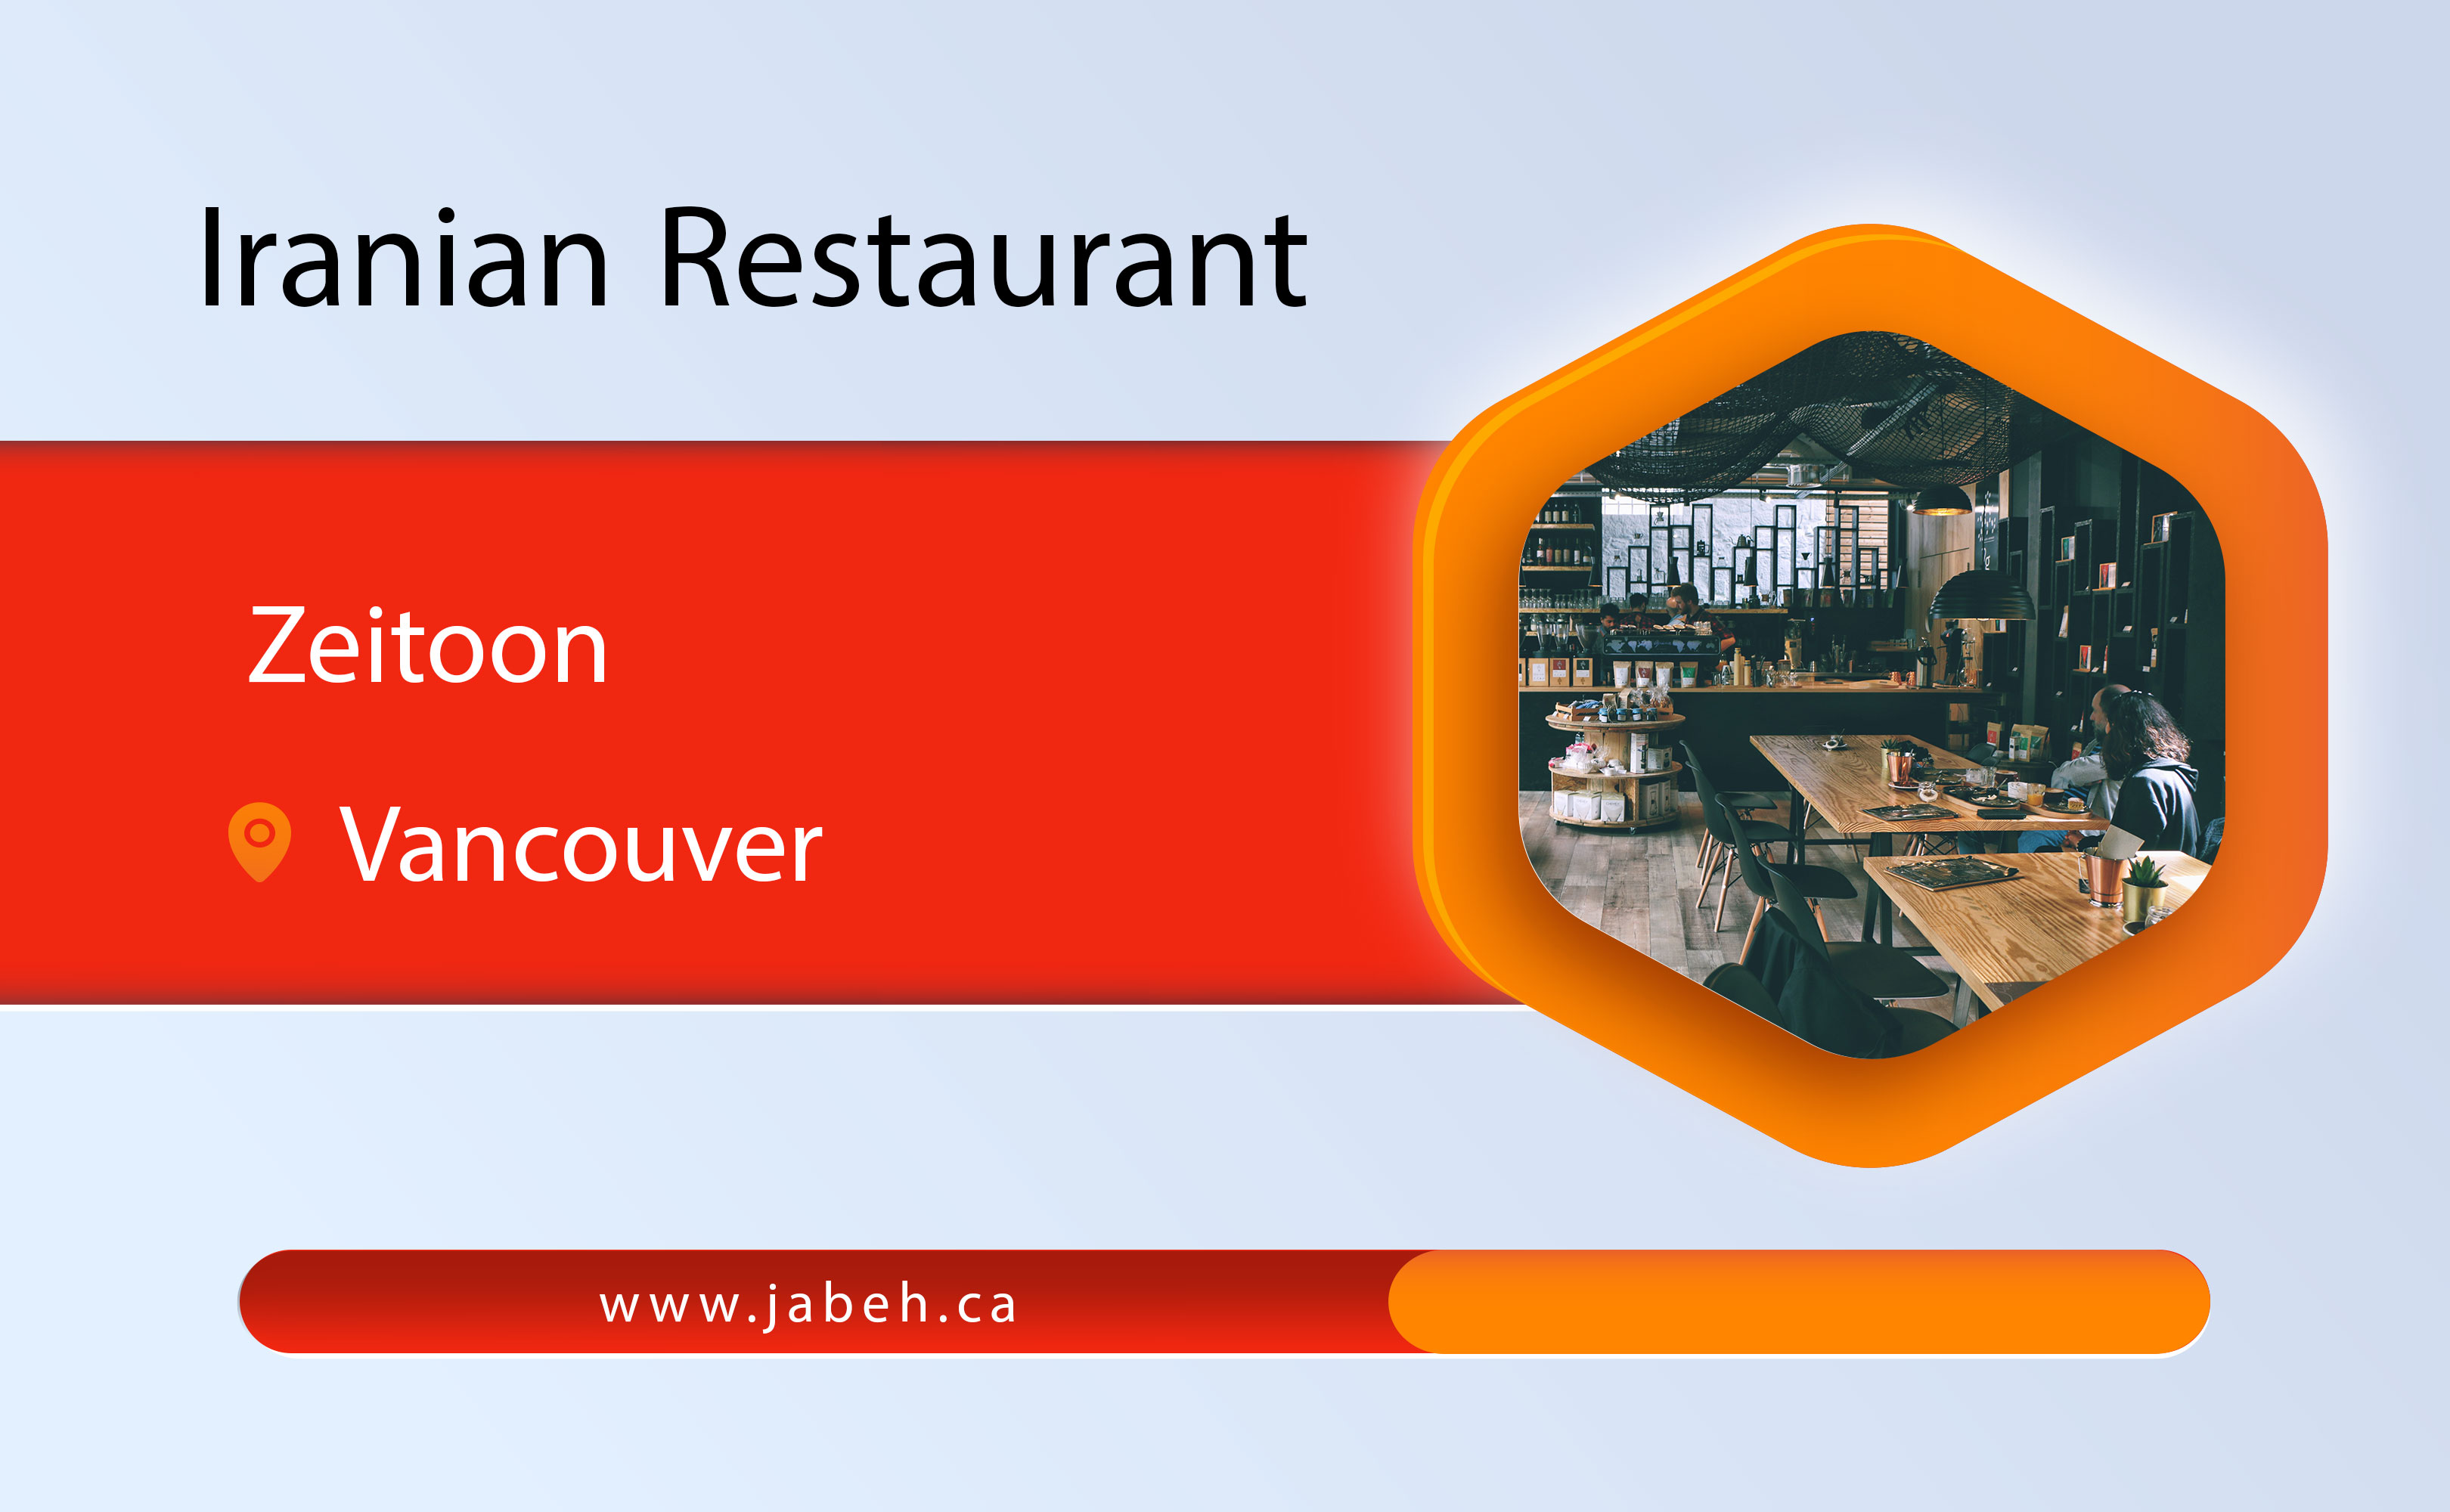 Zeitoun Iranian restaurant in Vancouver